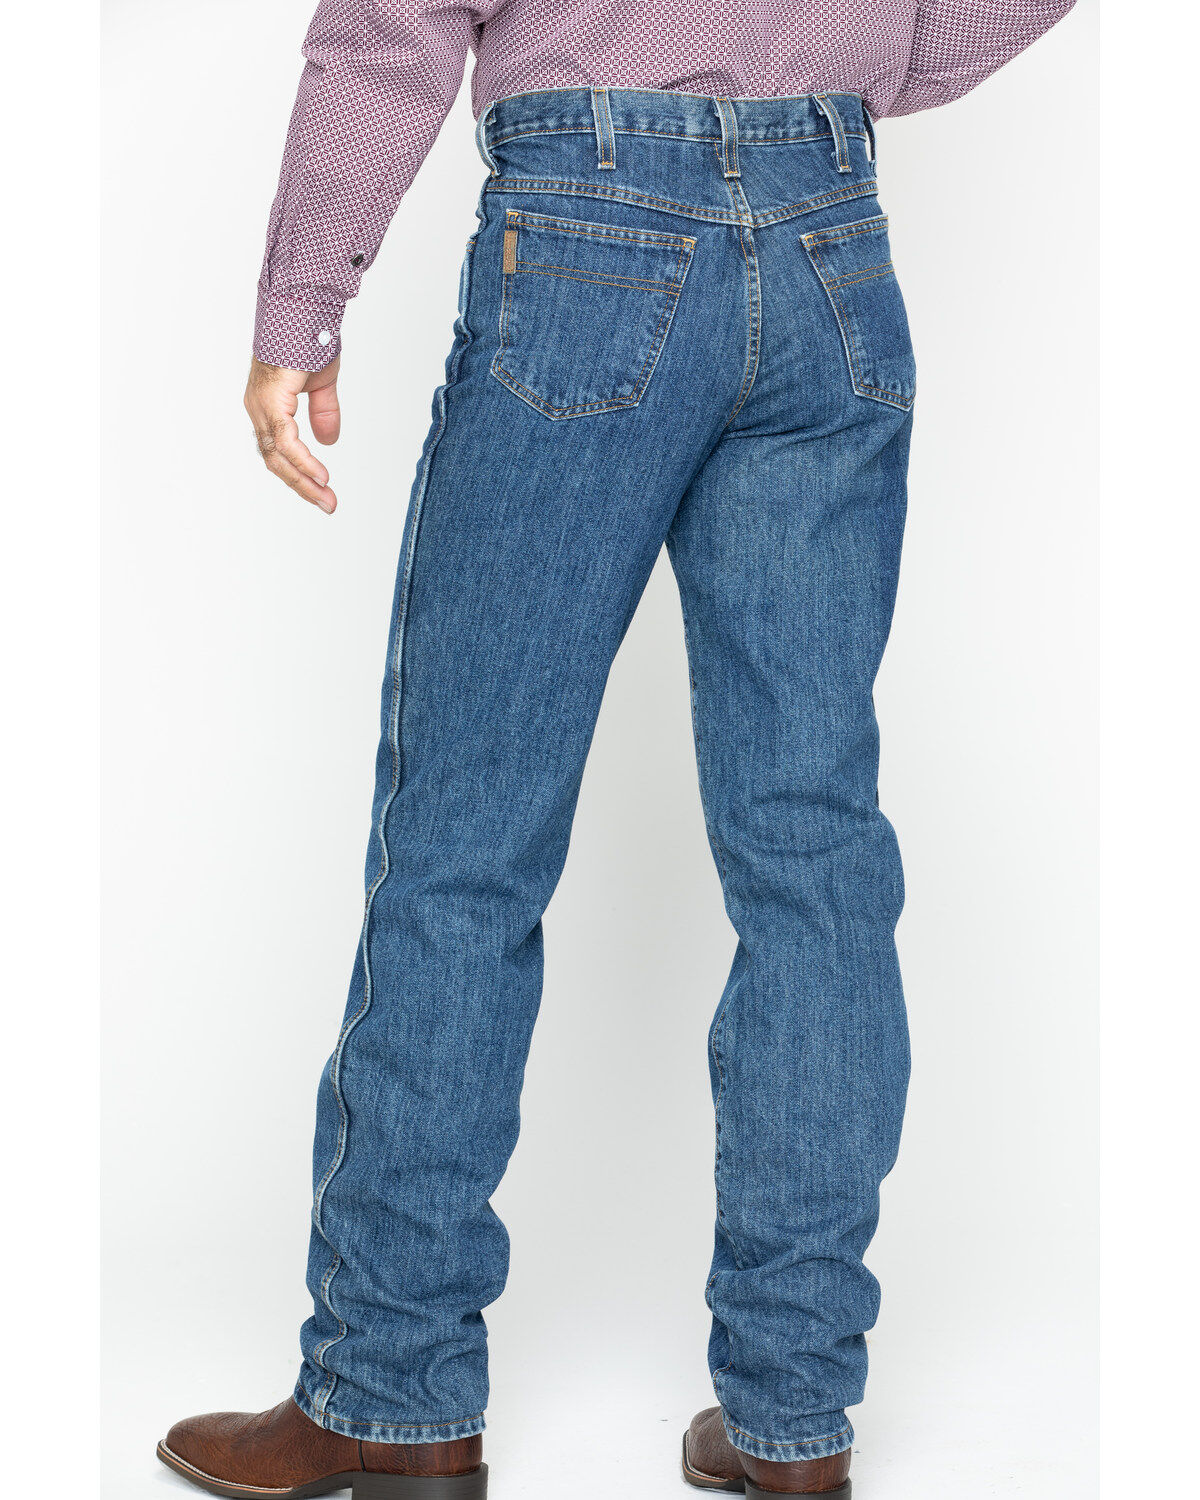 Men's Jeans on Sale